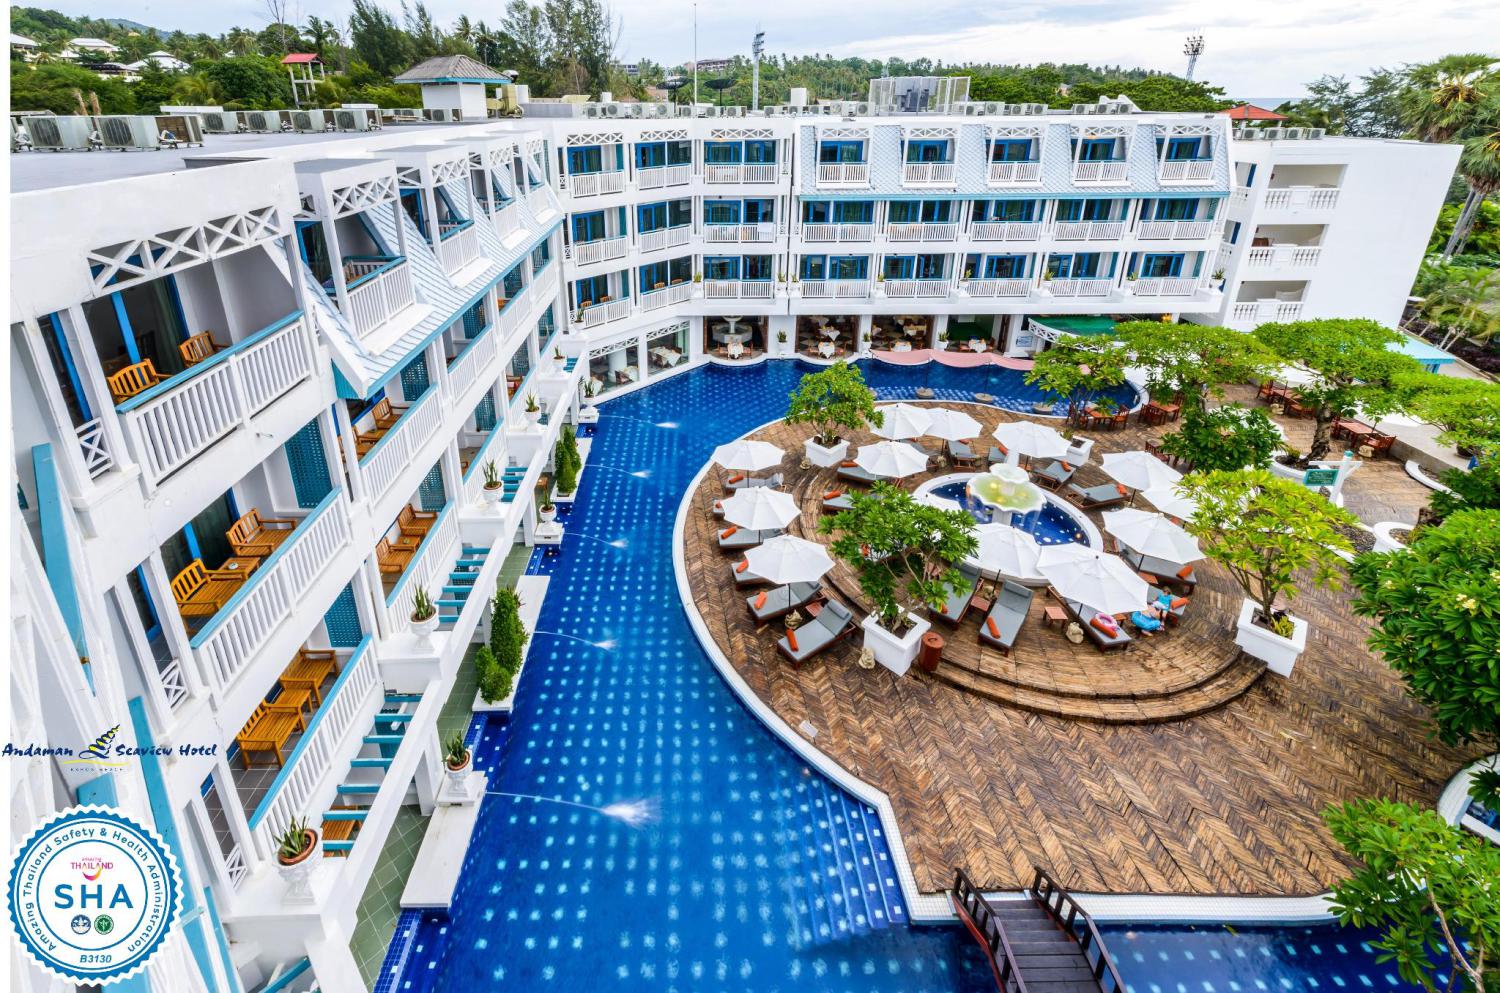 Andaman Seaview Hotel - Image 0